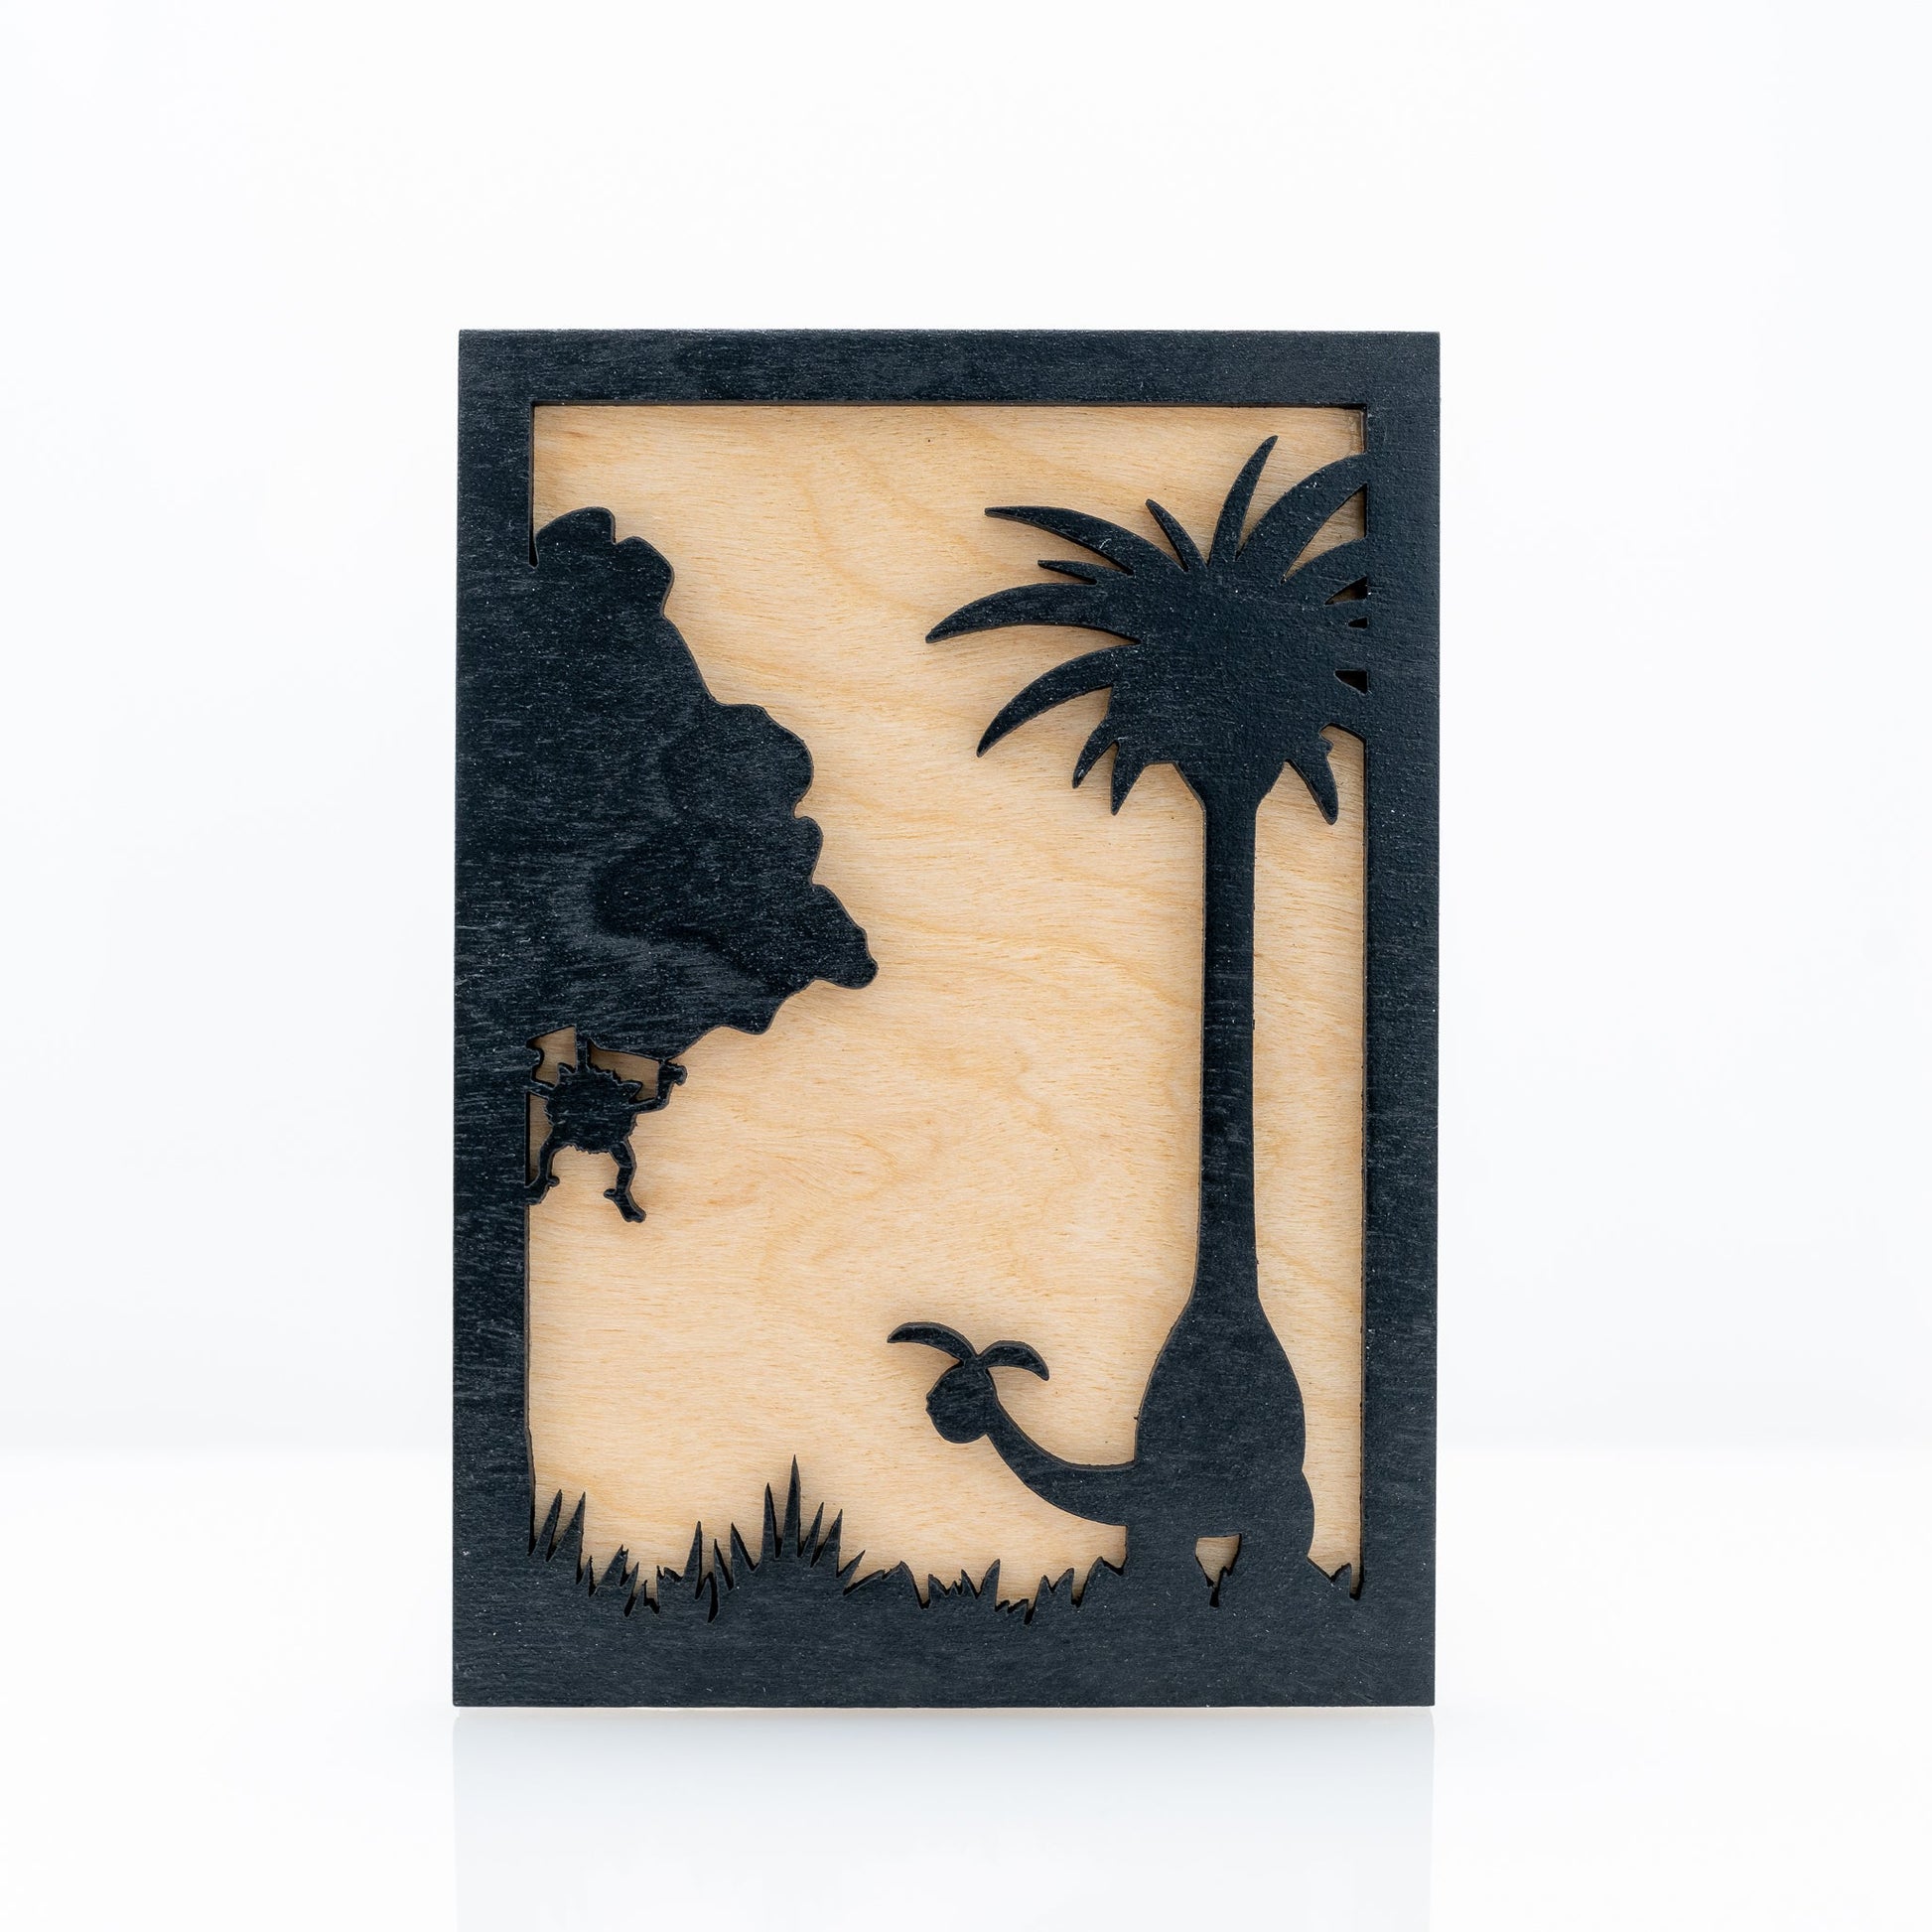 handmade wooden Pokémon shadow box panels depicting a plains scene